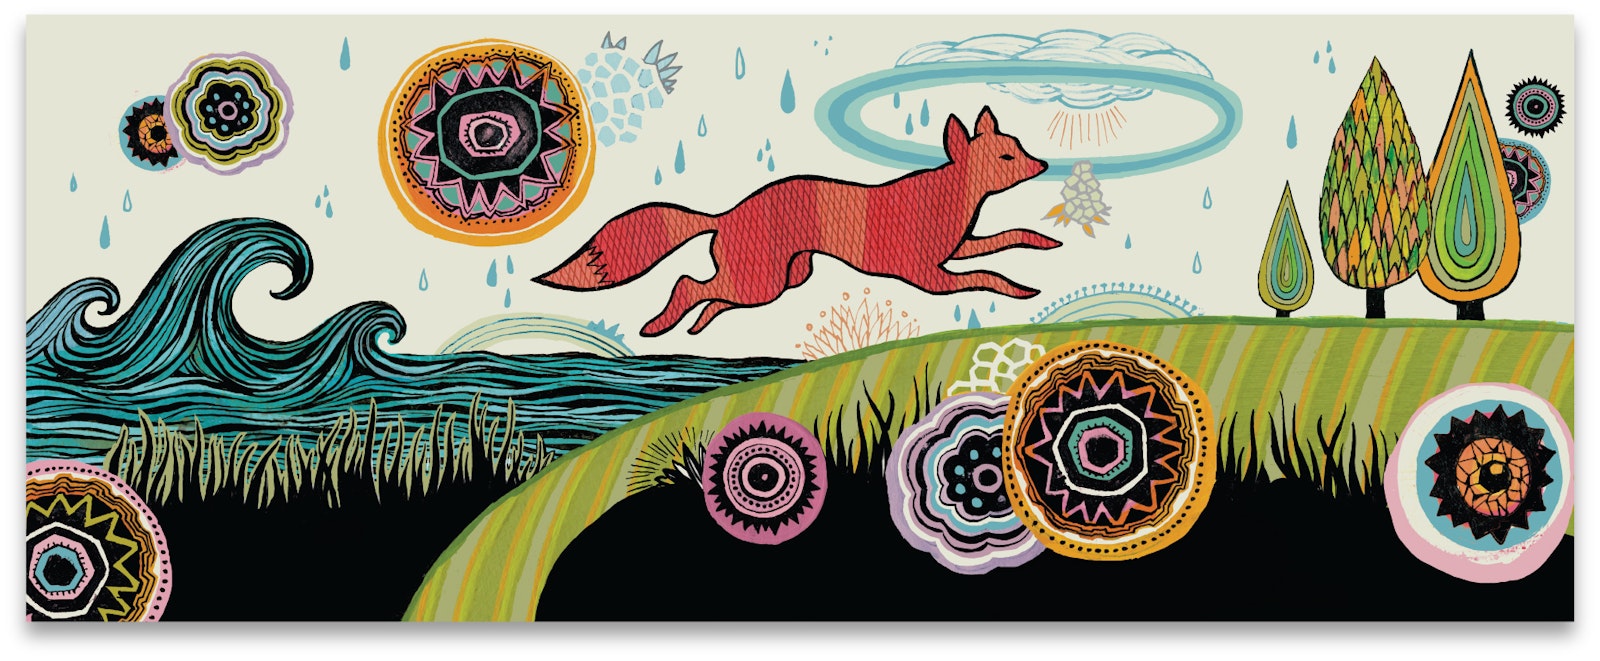 Fox River Illustration A